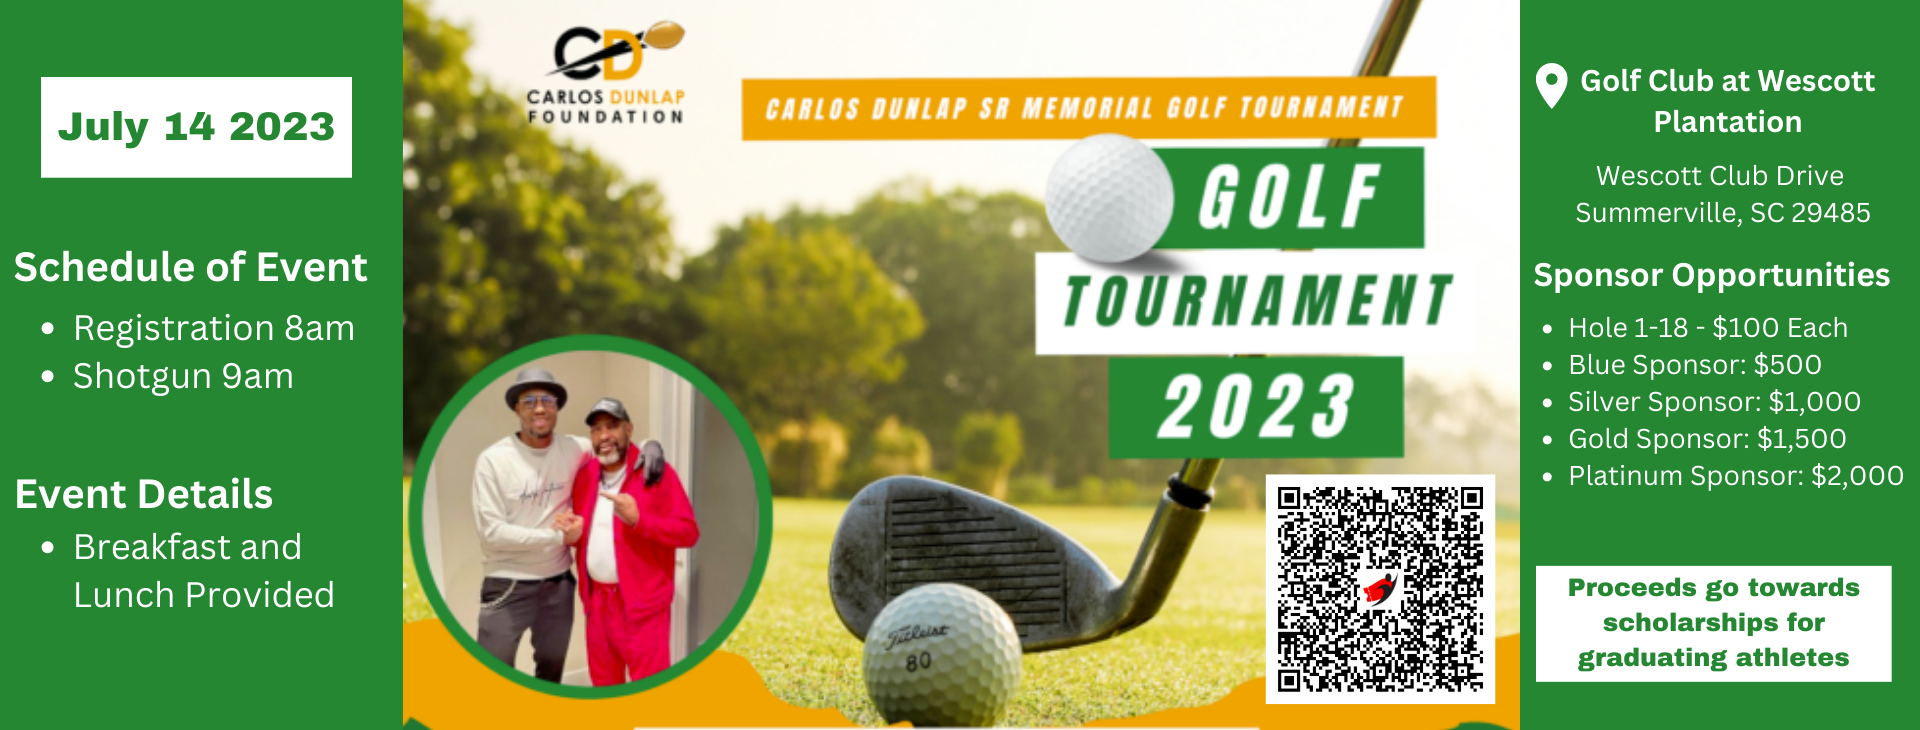 Carlos Dunlap Sr Memorial Golf Tournament EventPassHero